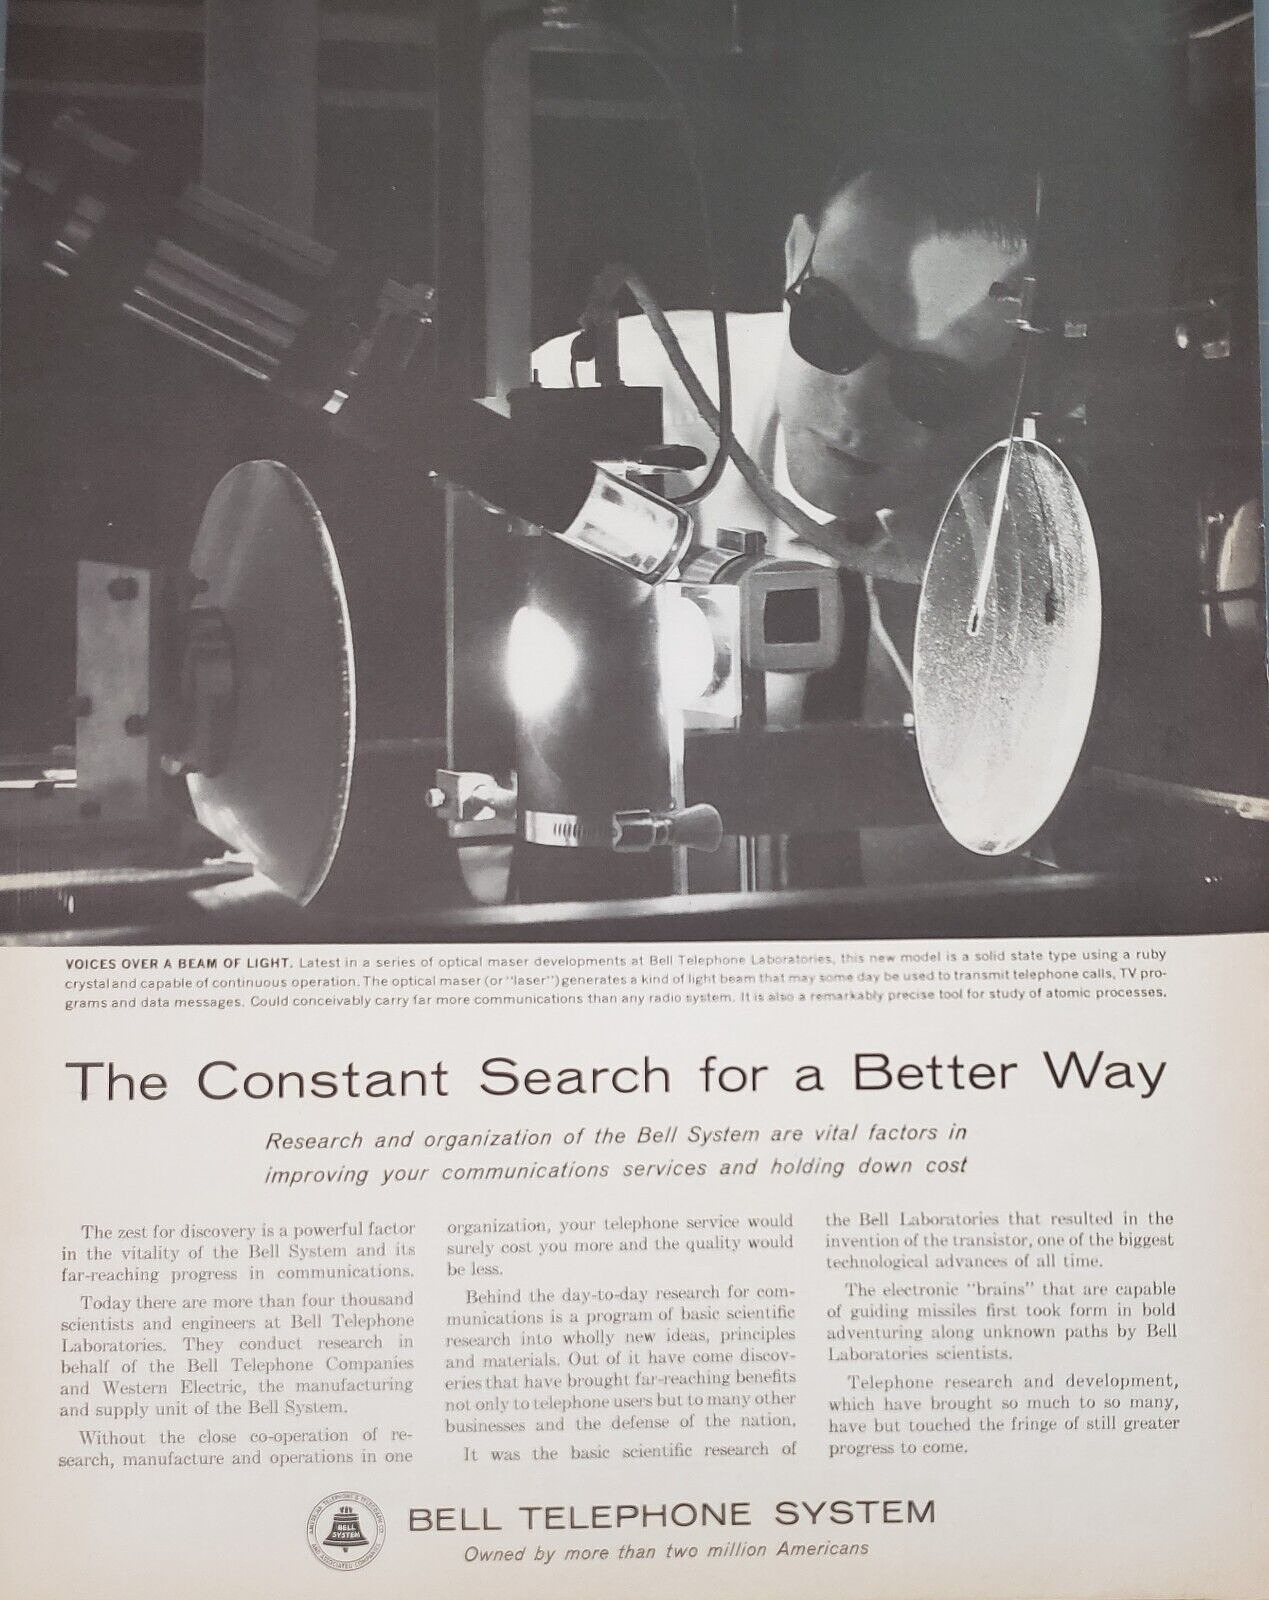 1962 Bell Telephone System Optical Maser Developments Vintage Print Ad